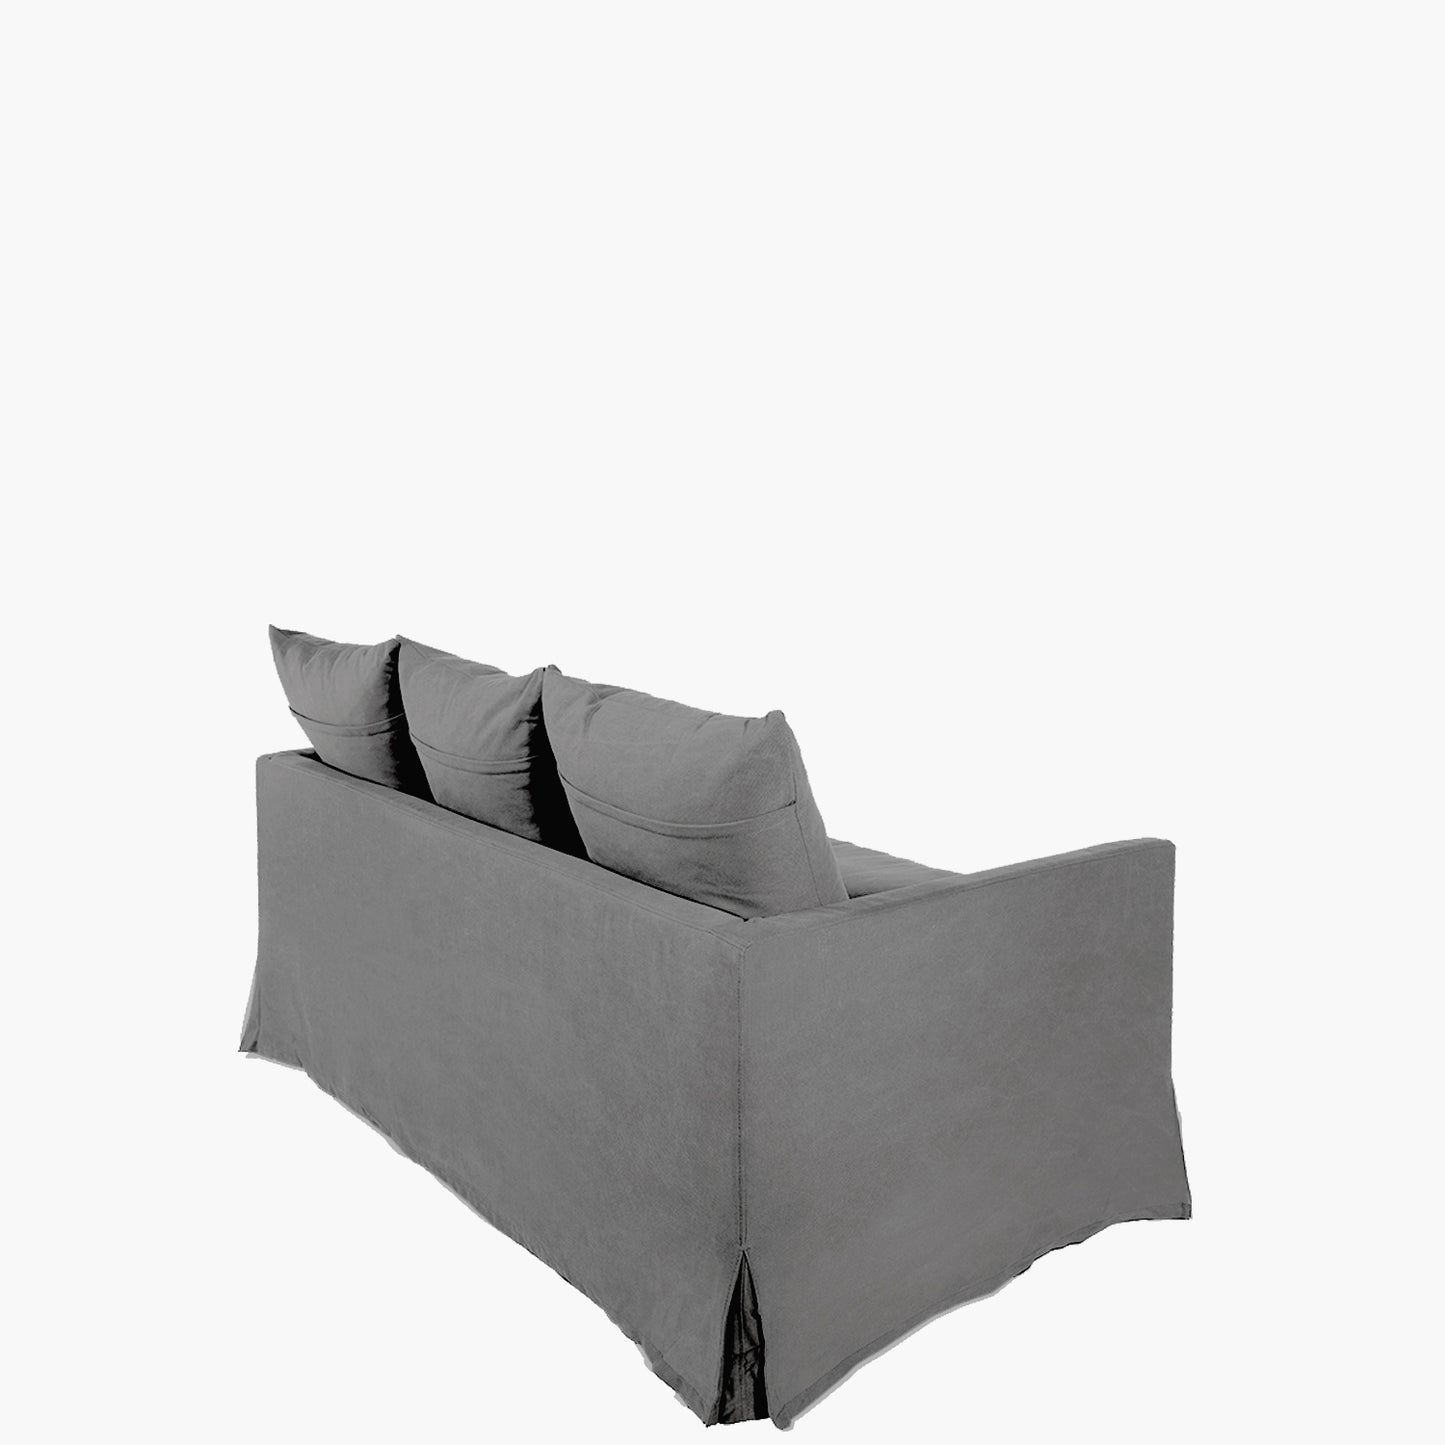 sofa-2c-simone-acero-form-design